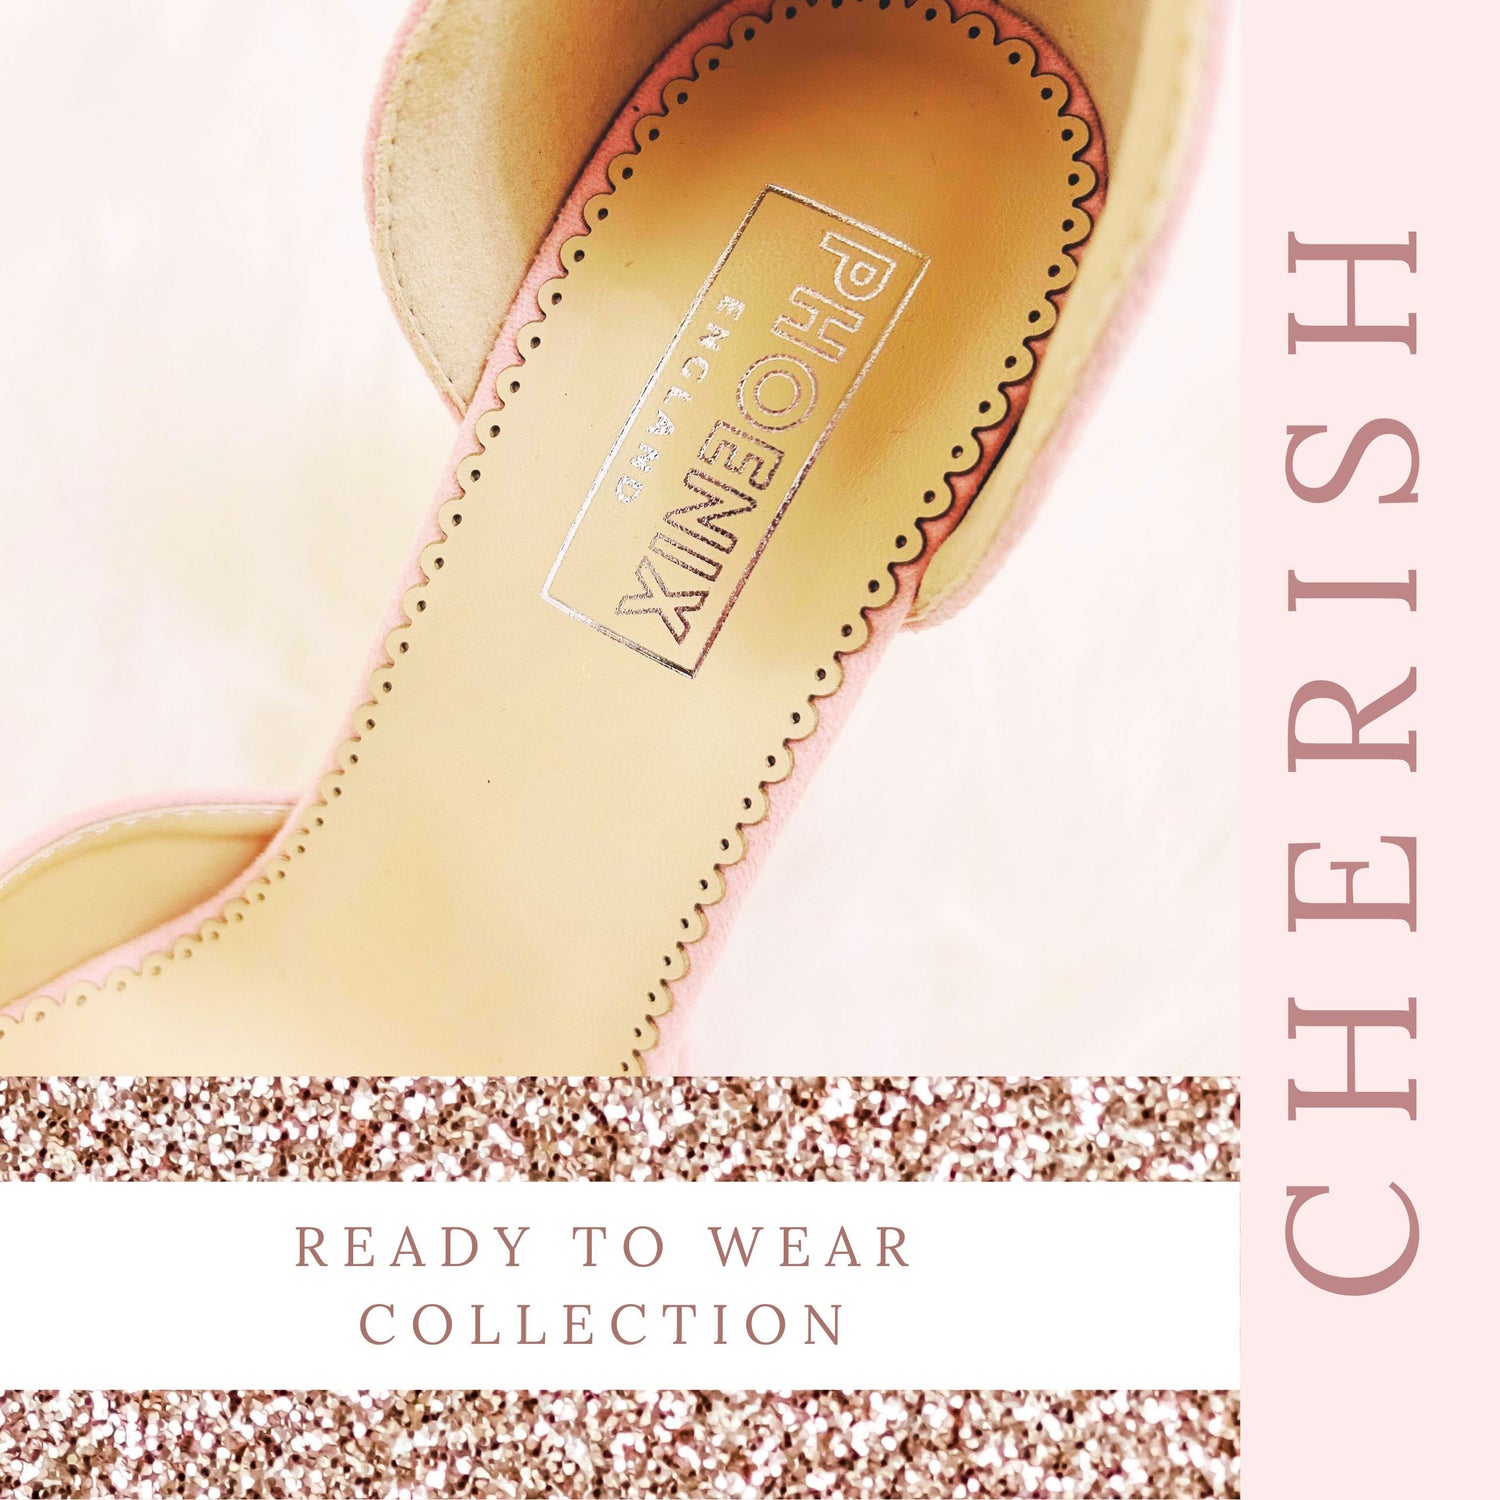 blush-wedding-dress-shoes